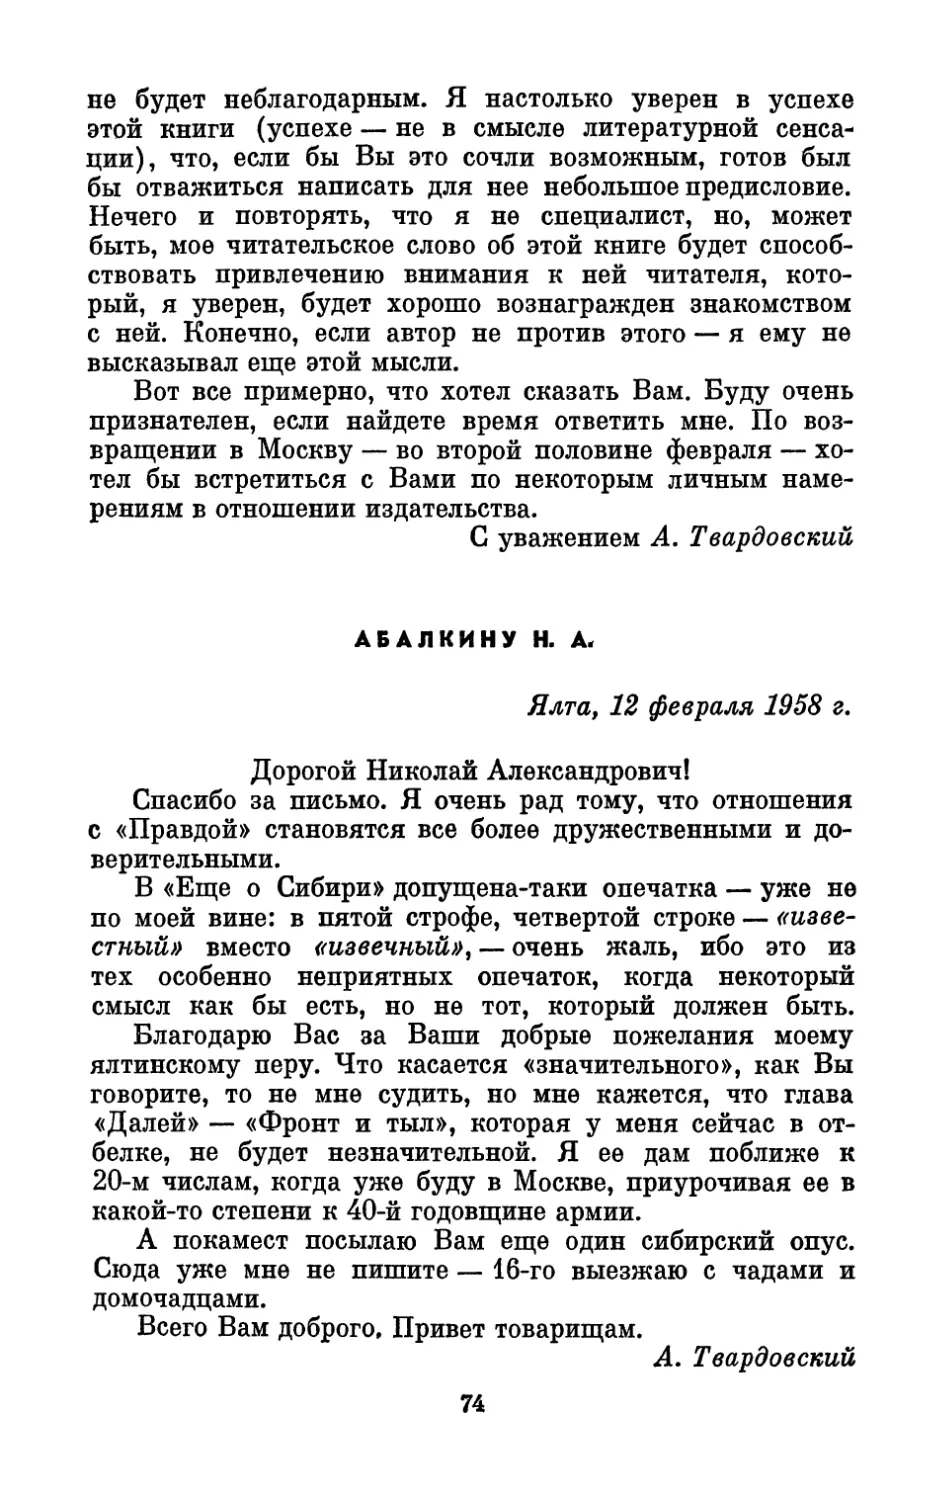 Абалкину Н. А., 12 февраля 1958 г.